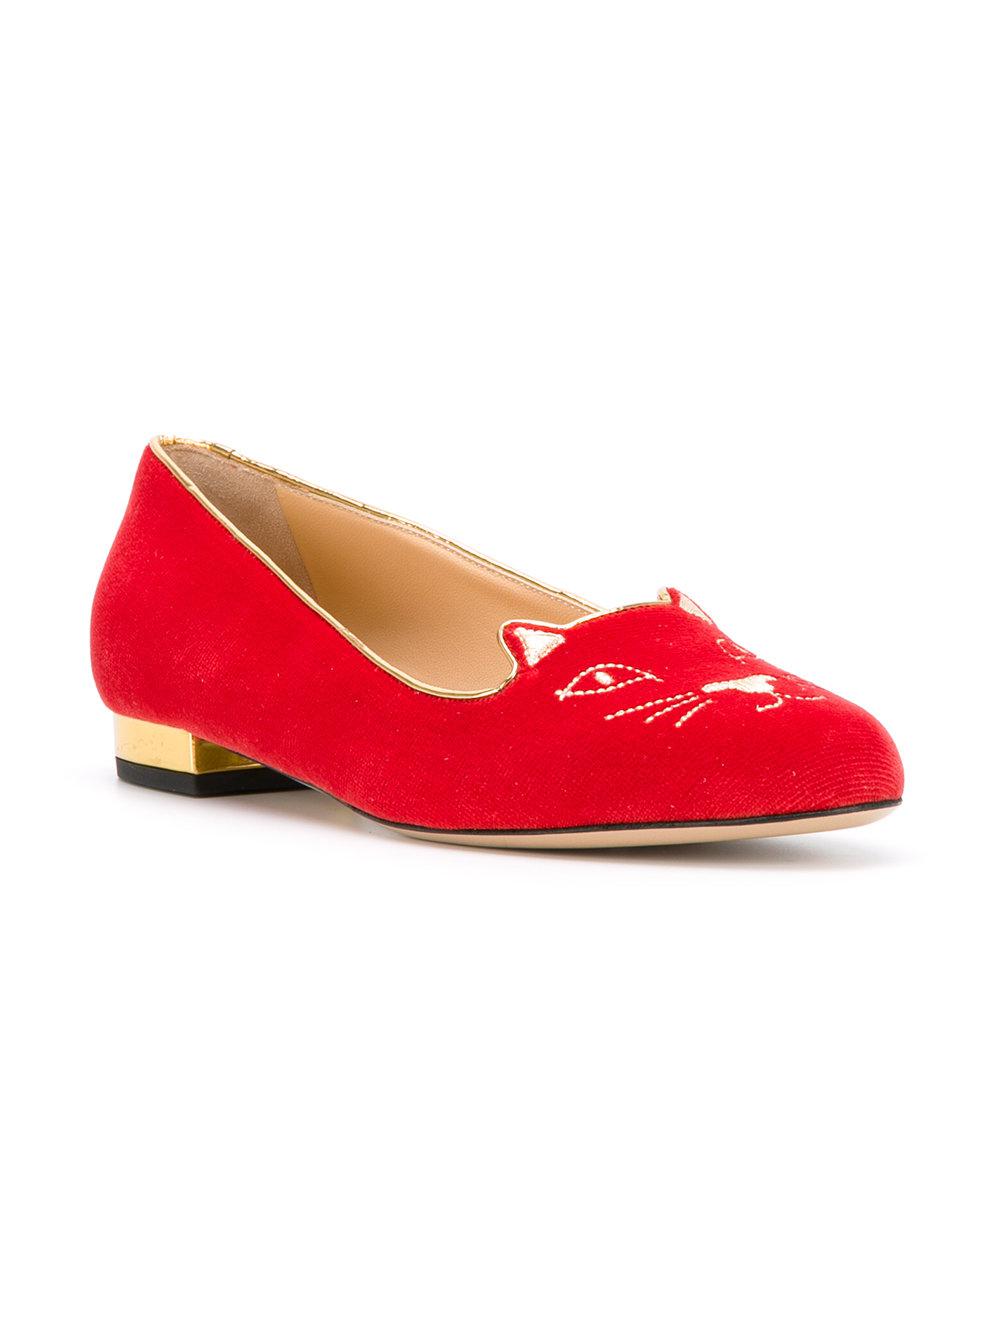 Charlotte Olympia Velvet Cat Face Ballerina Shoes in Red - Lyst